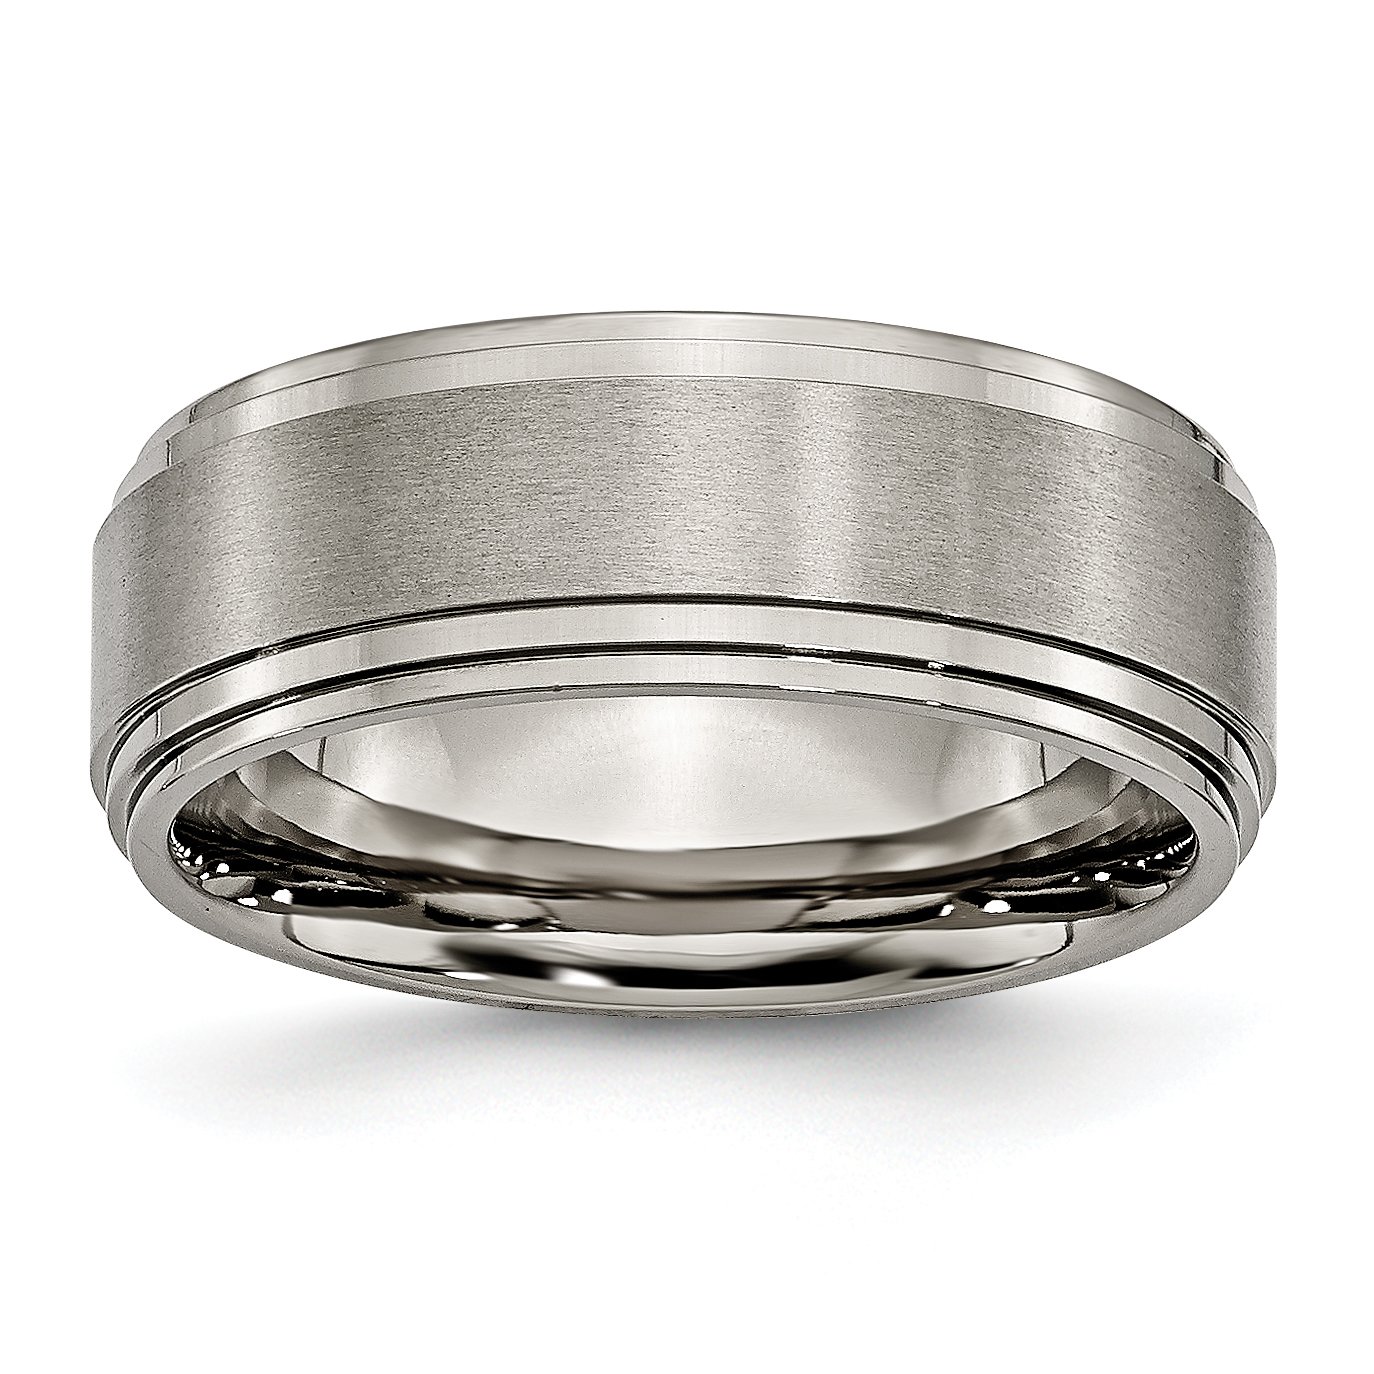 Findingking Titanium 8mm Satin Mens Wedding Ring Band Size 11